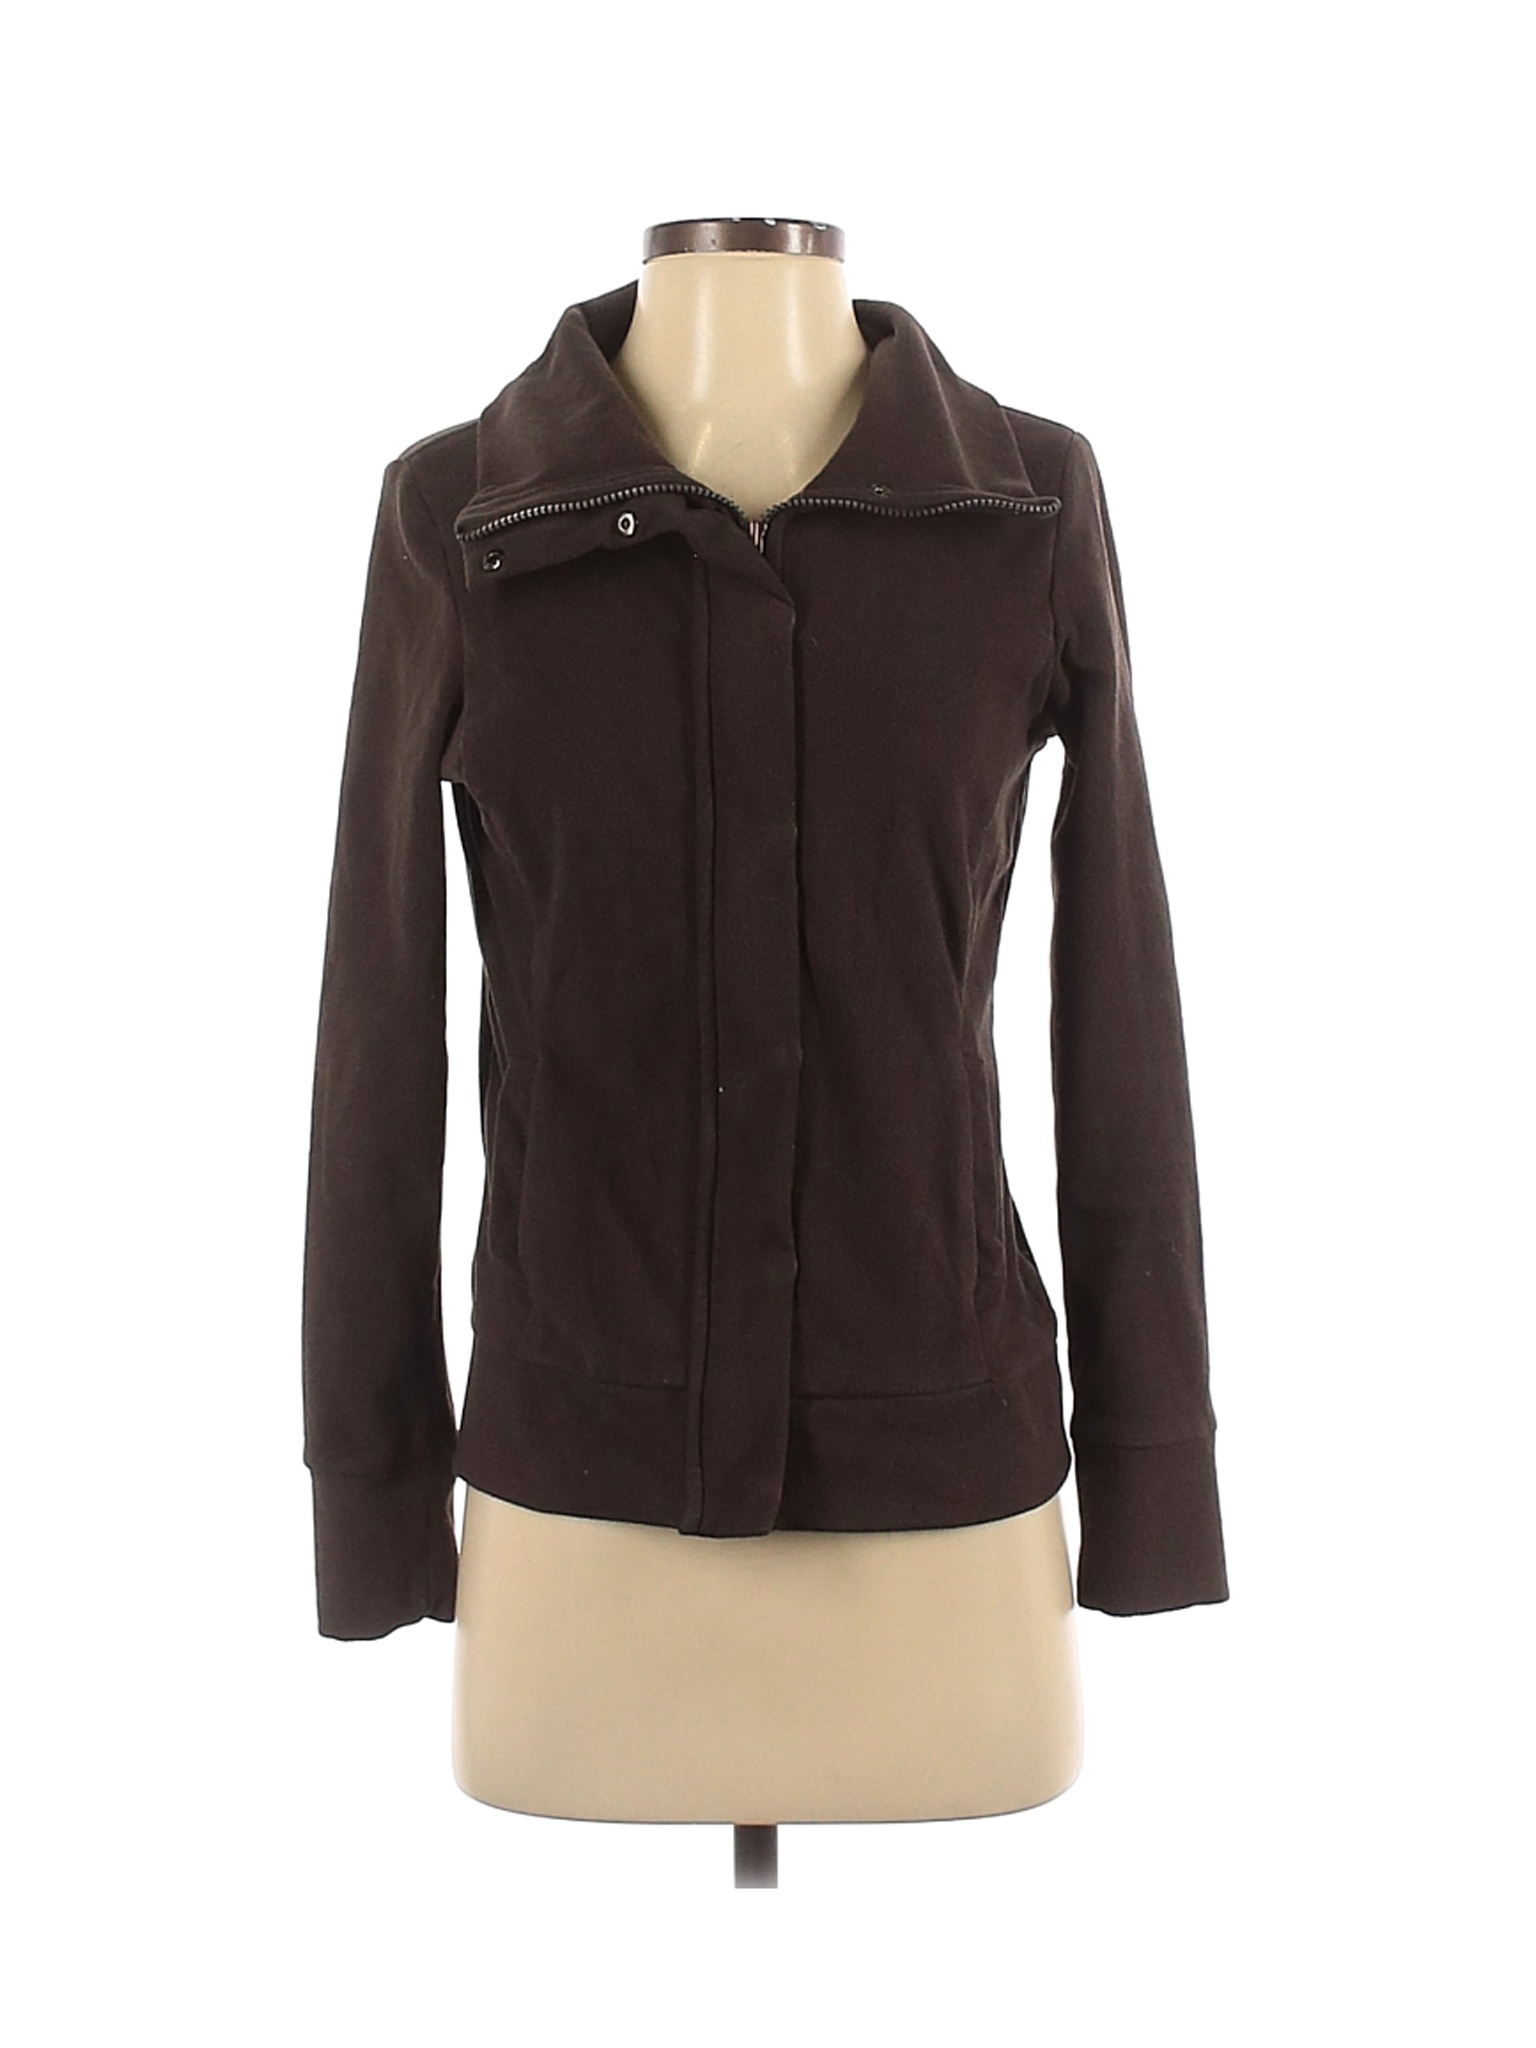 Esprit 100% Polyester Solid Brown Fleece Size XS - 91% off | thredUP